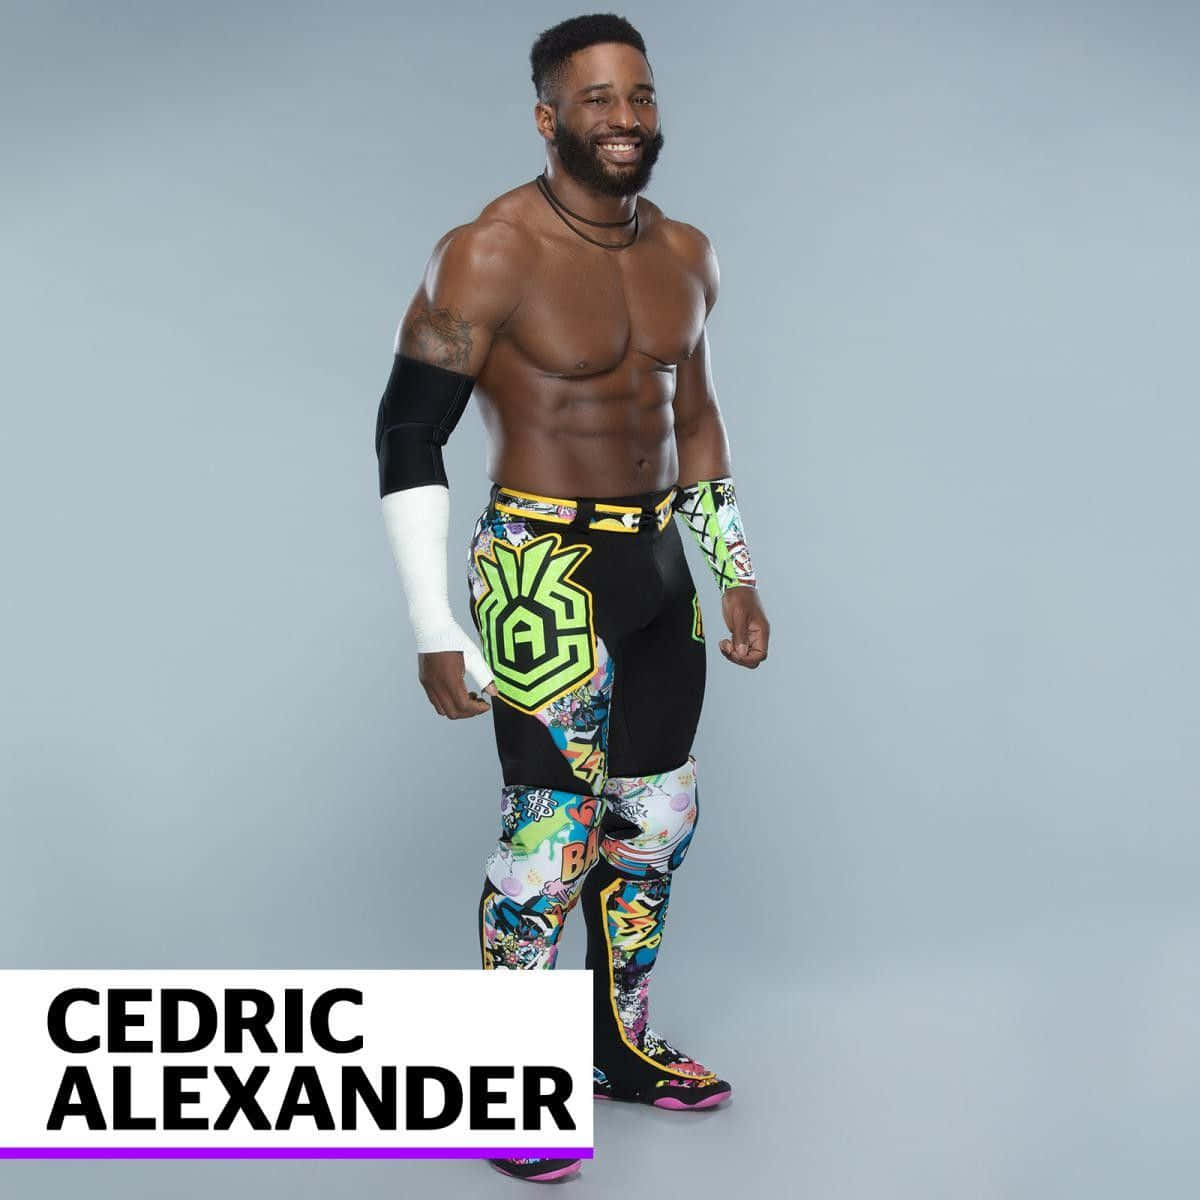 American Professional Wrestler Cedric Alexander Portrait Wallpaper